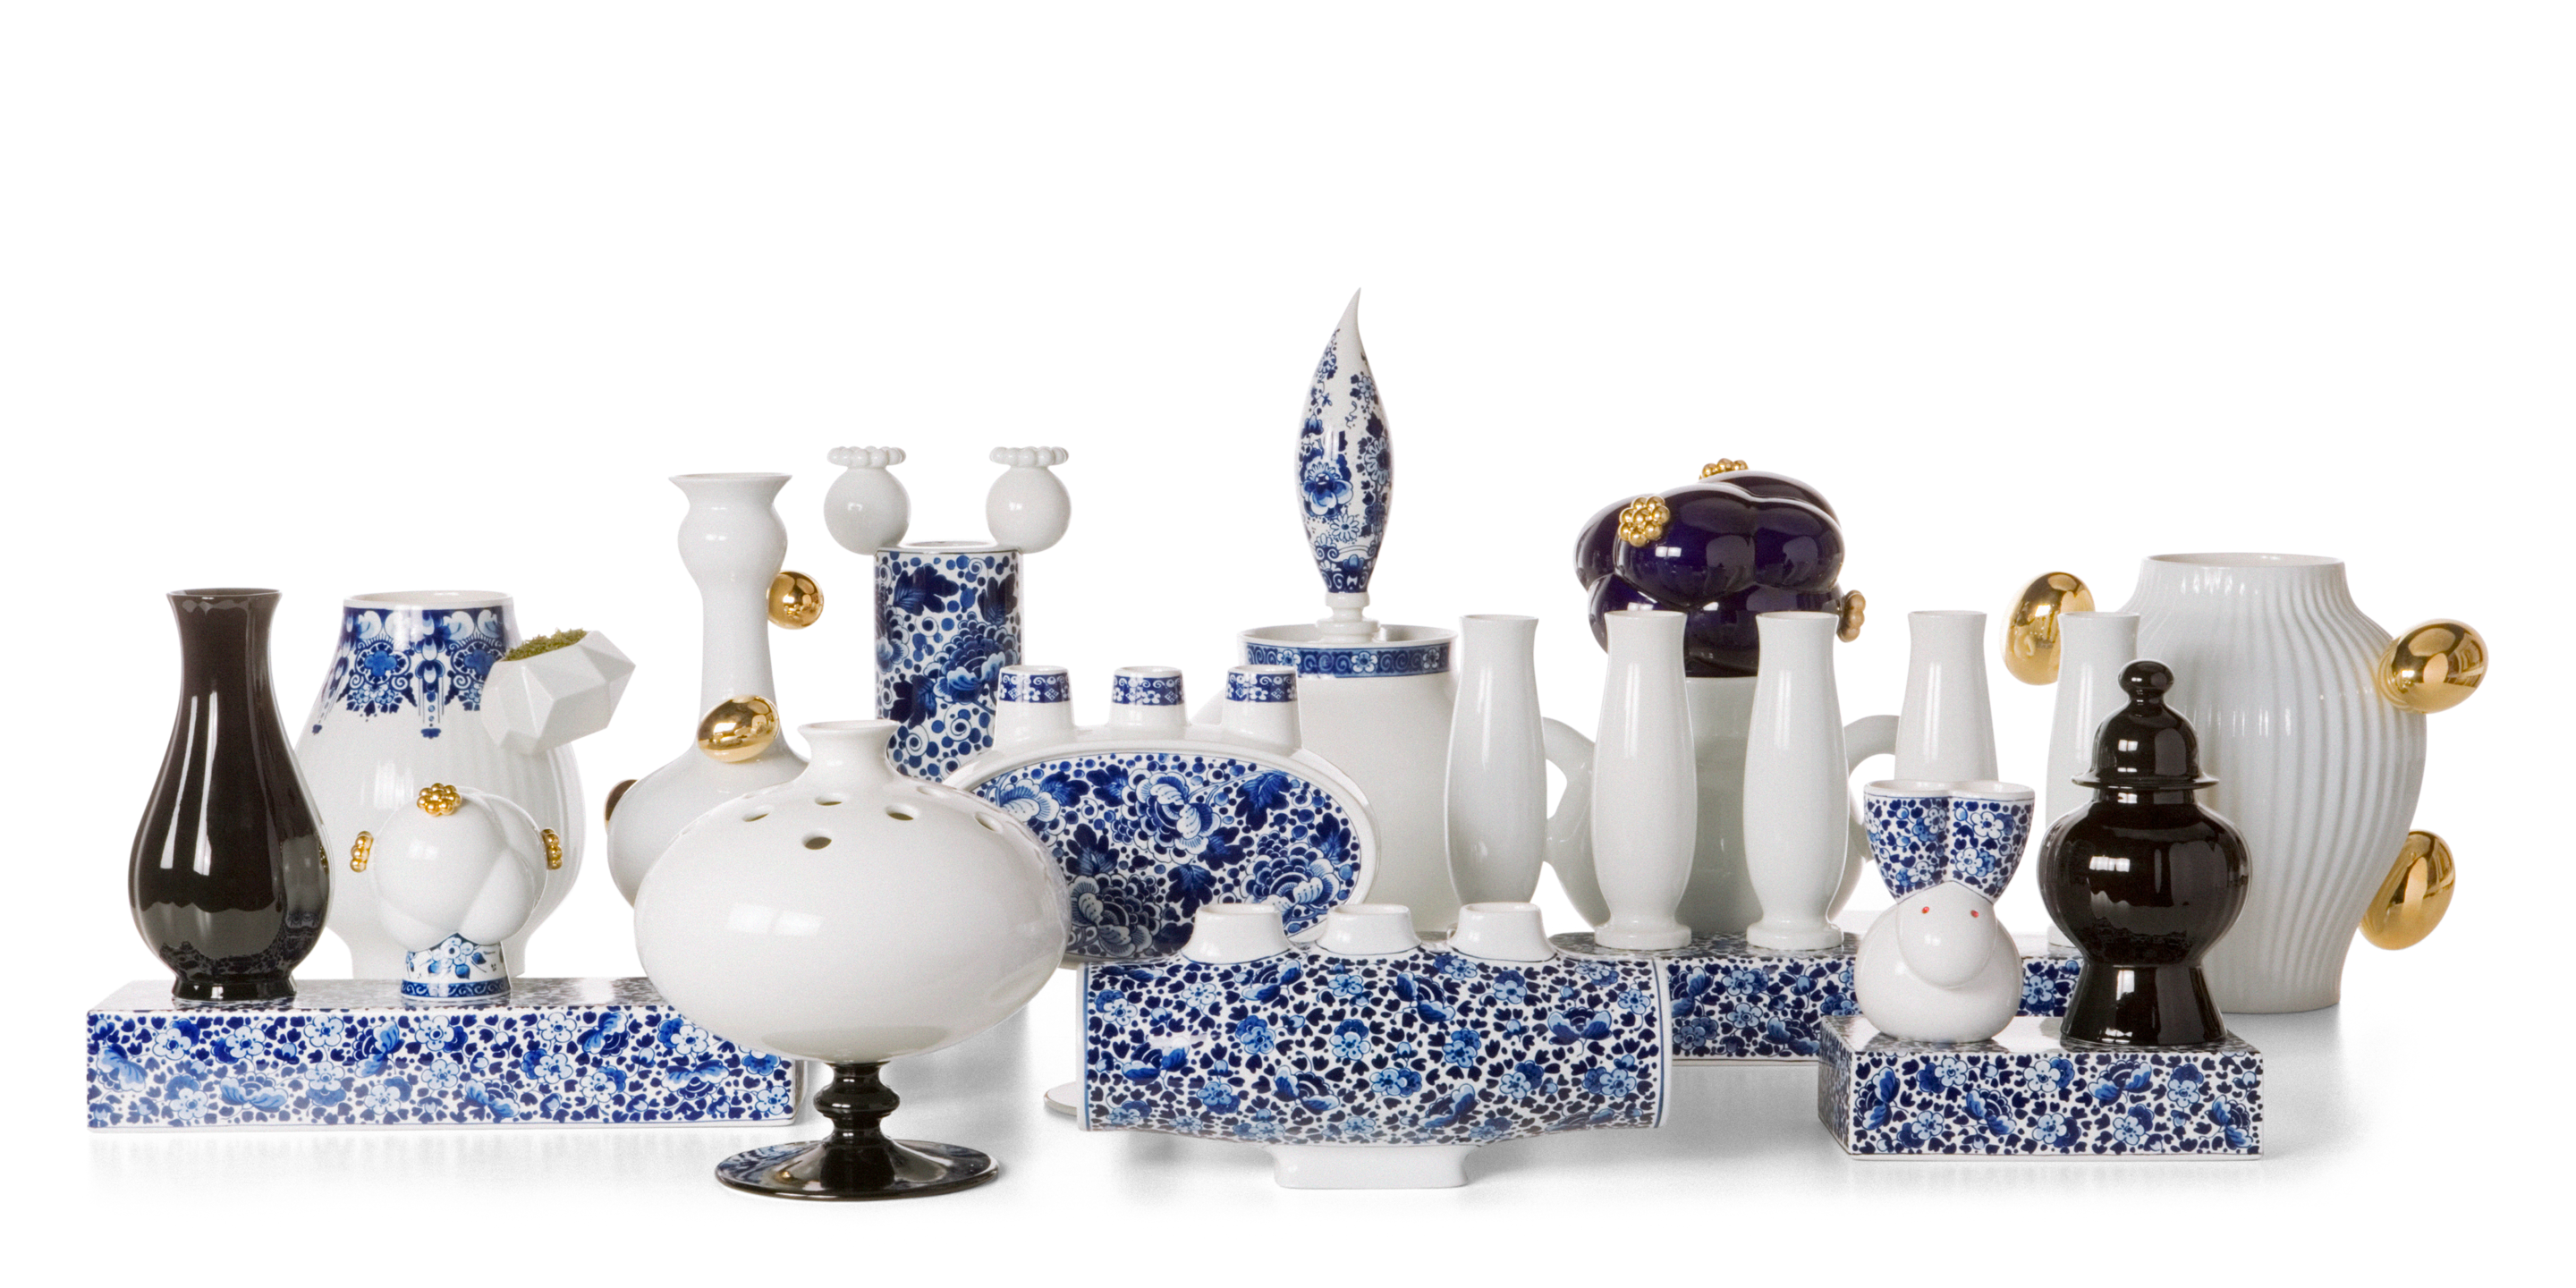 Delft blue all vases group 